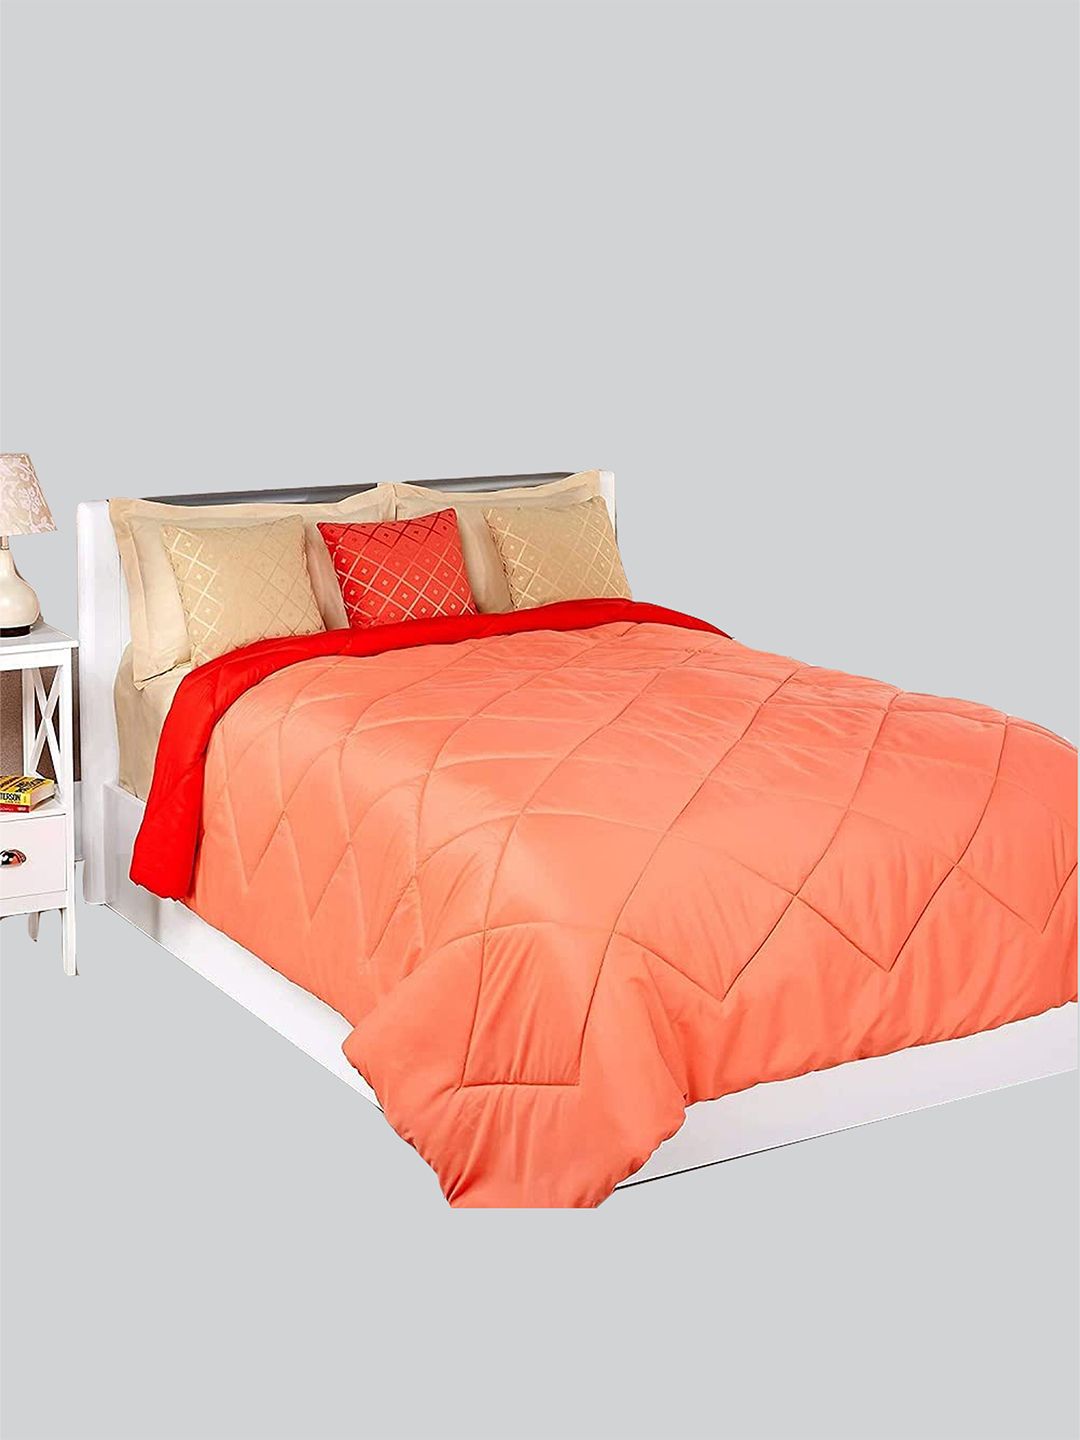 RAASO Orange & Red Microfiber AC Room Double Bed Blanket Price in India